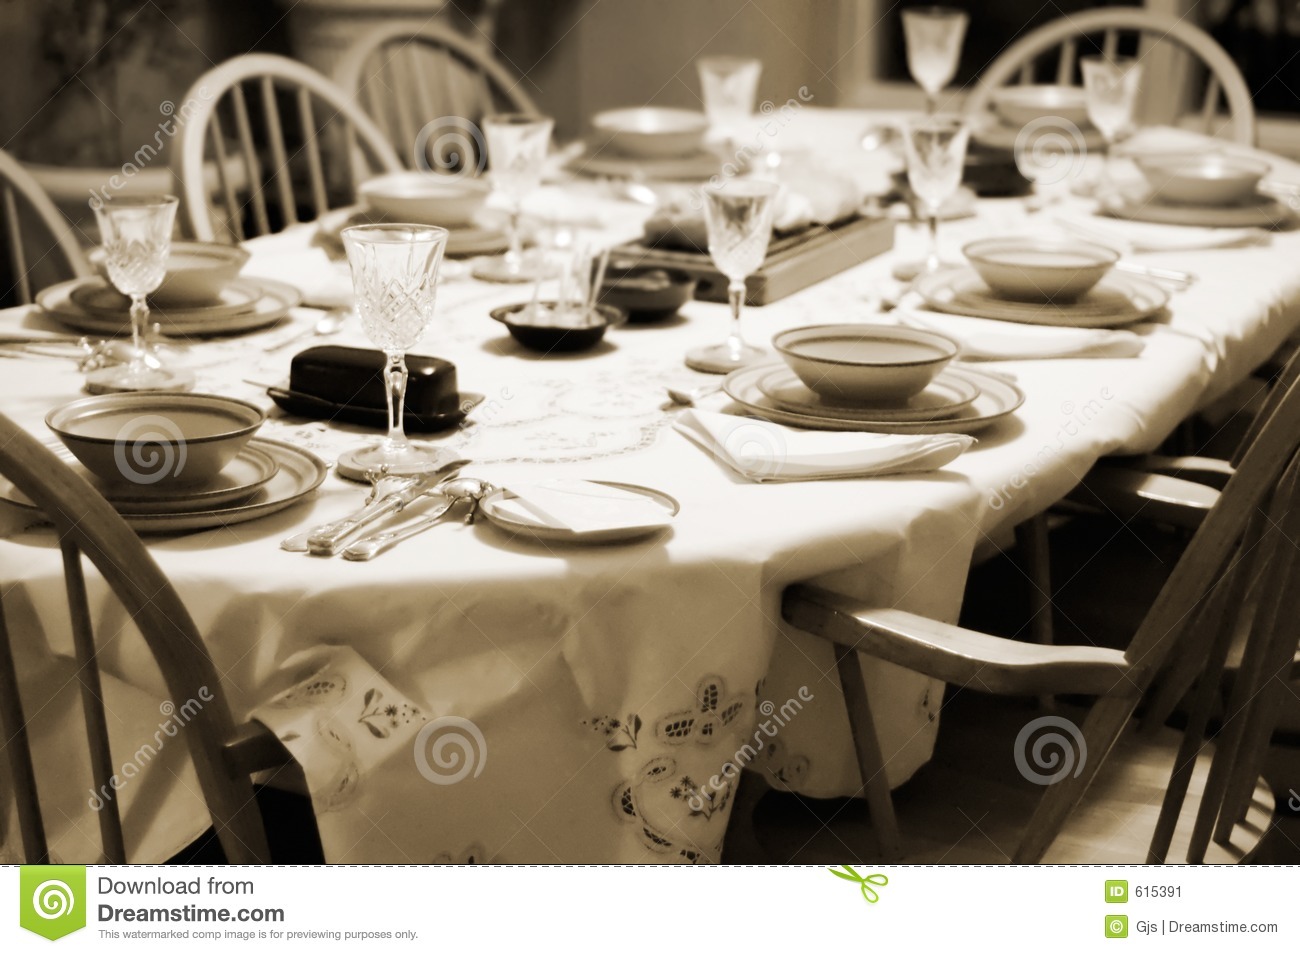 formal-table-setting-home-615391.jpg